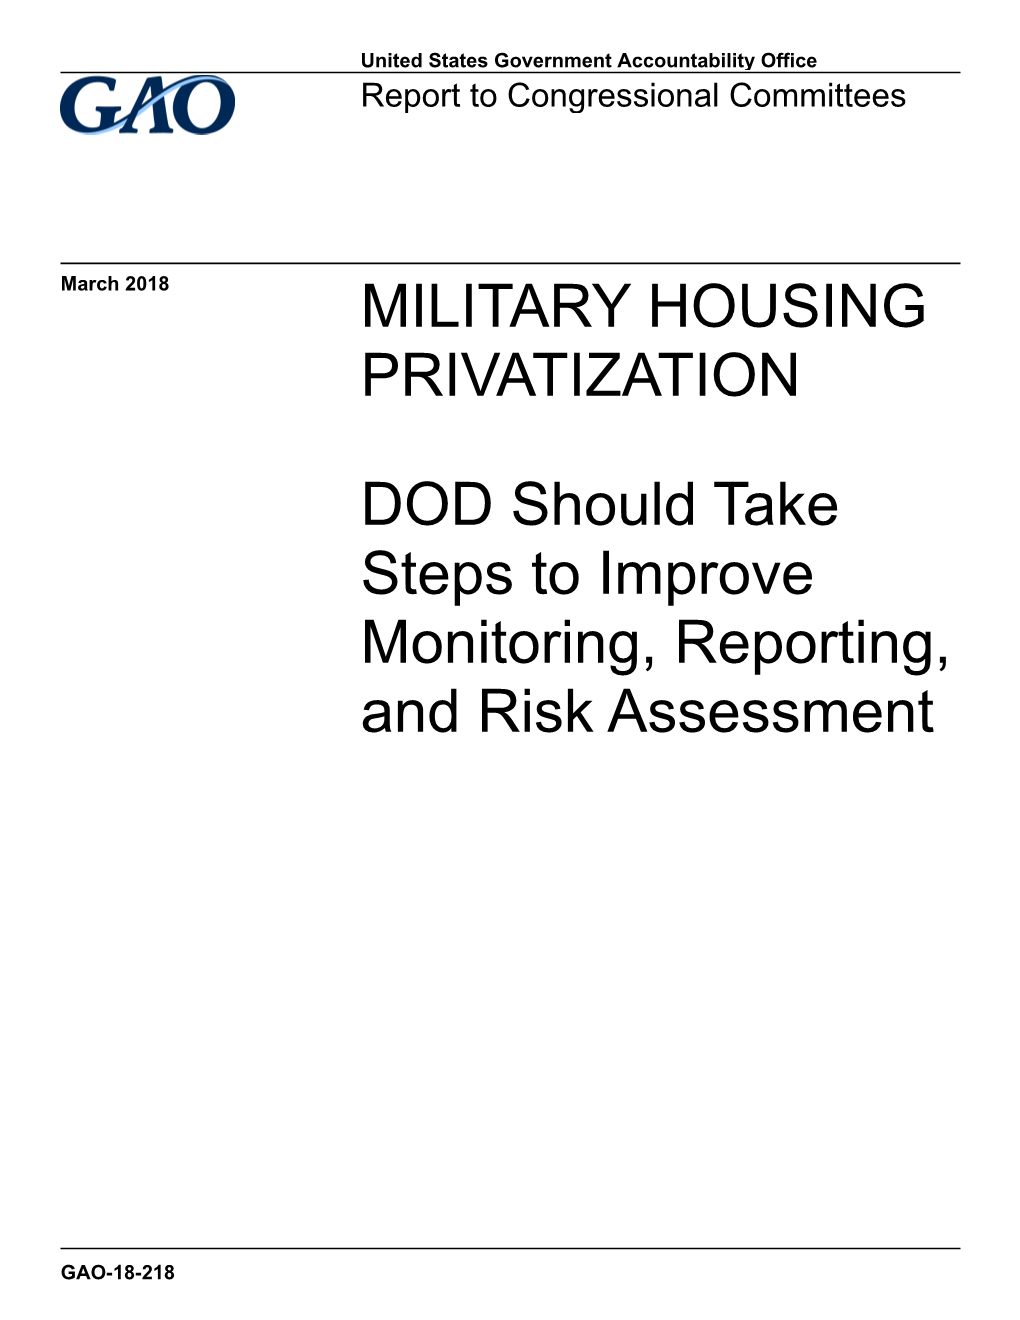 GAO-18-218, MILITARY HOUSING PRIVATIZATION: DOD Should Take